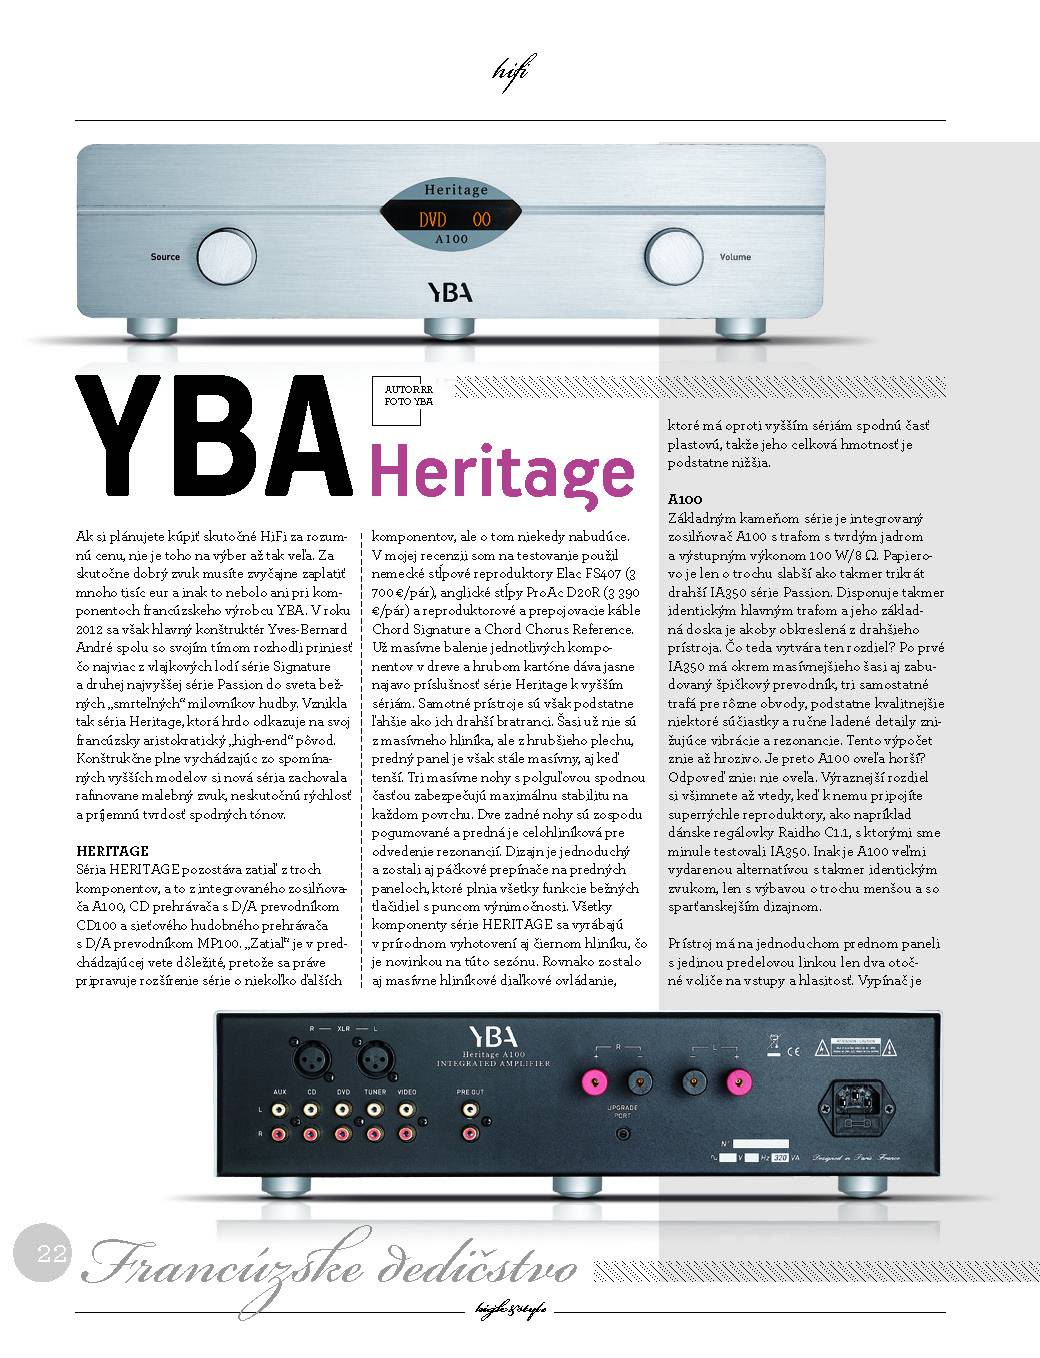 YBA Heritage A100